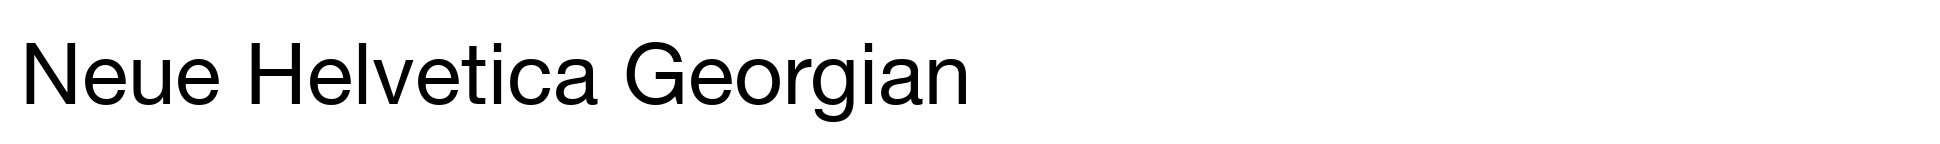 Neue Helvetica Georgian